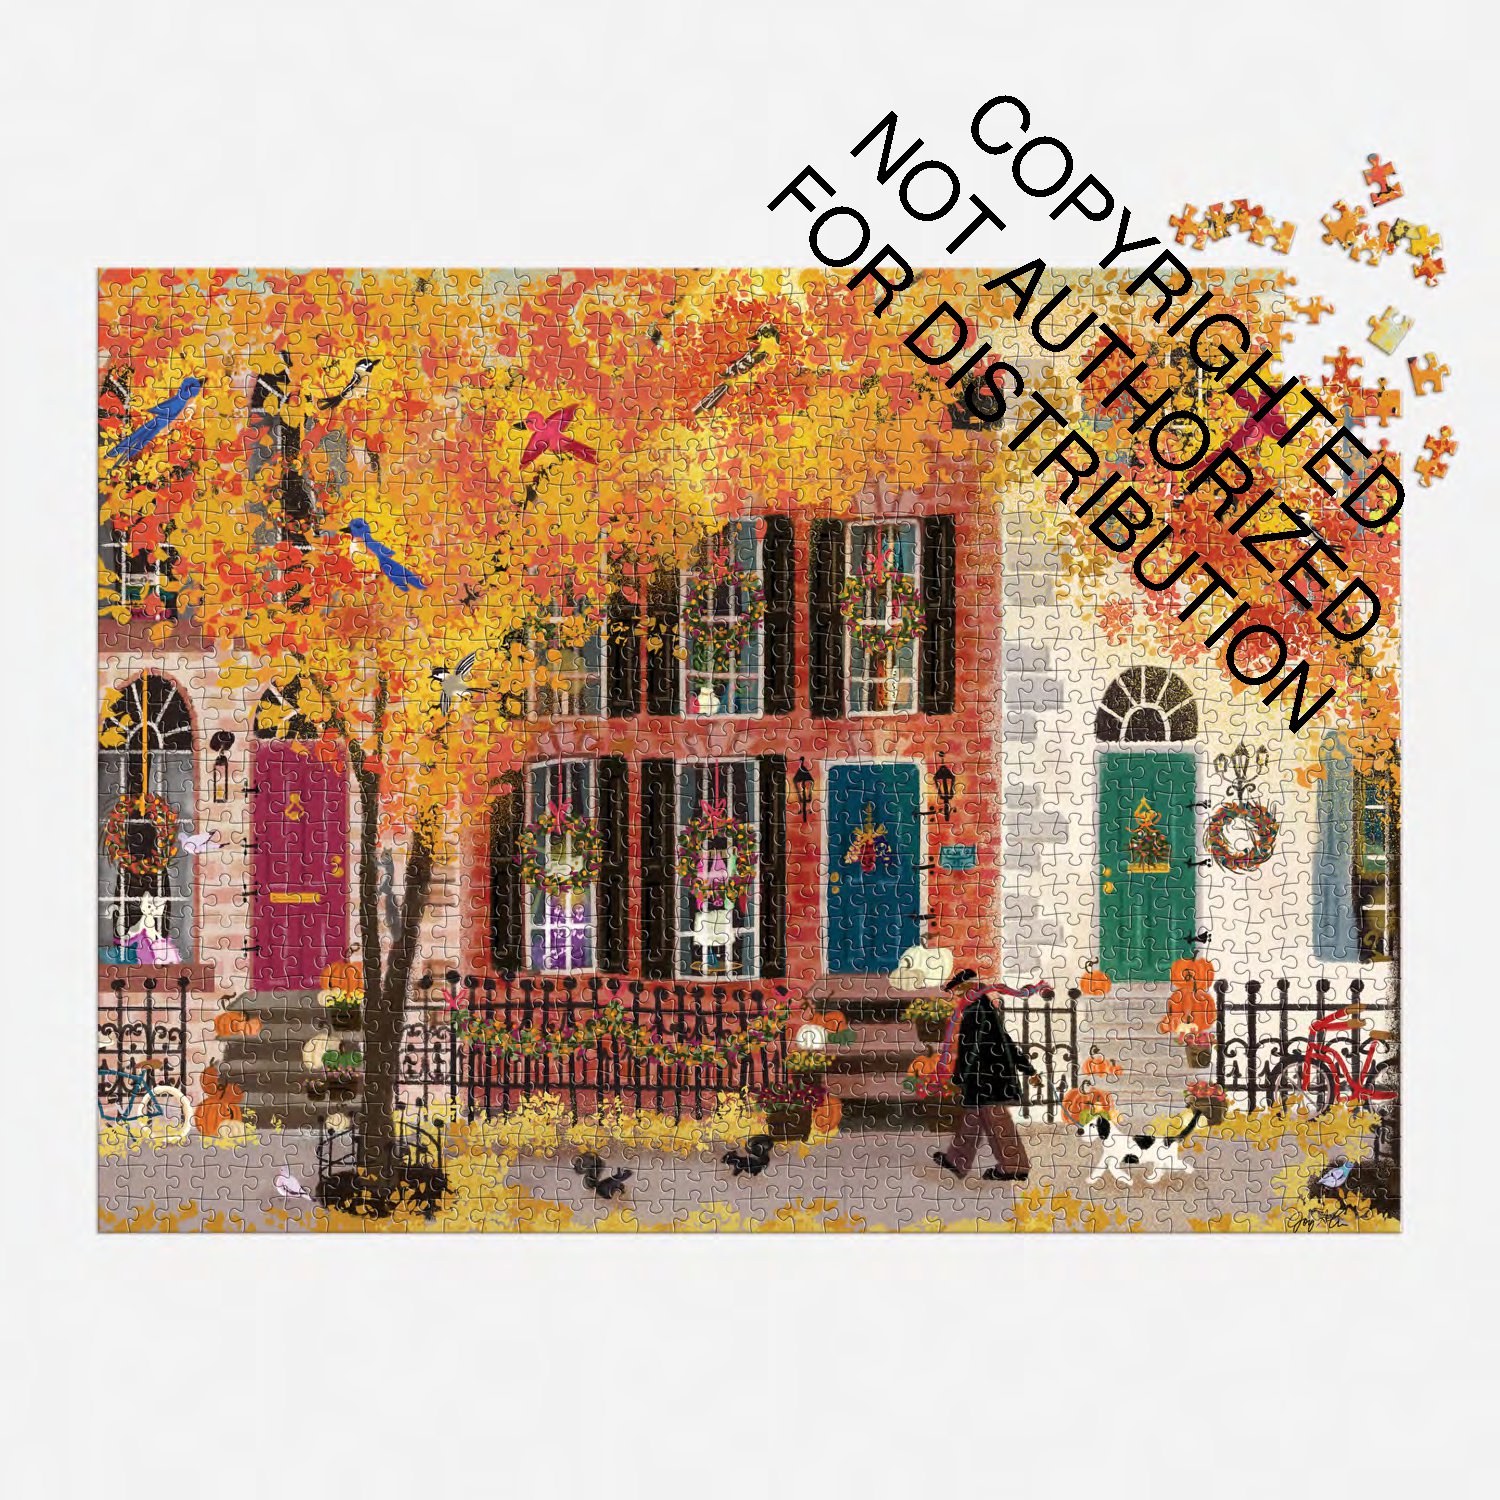 Autumn in the Neighborhood 1000 Piece Puzzle